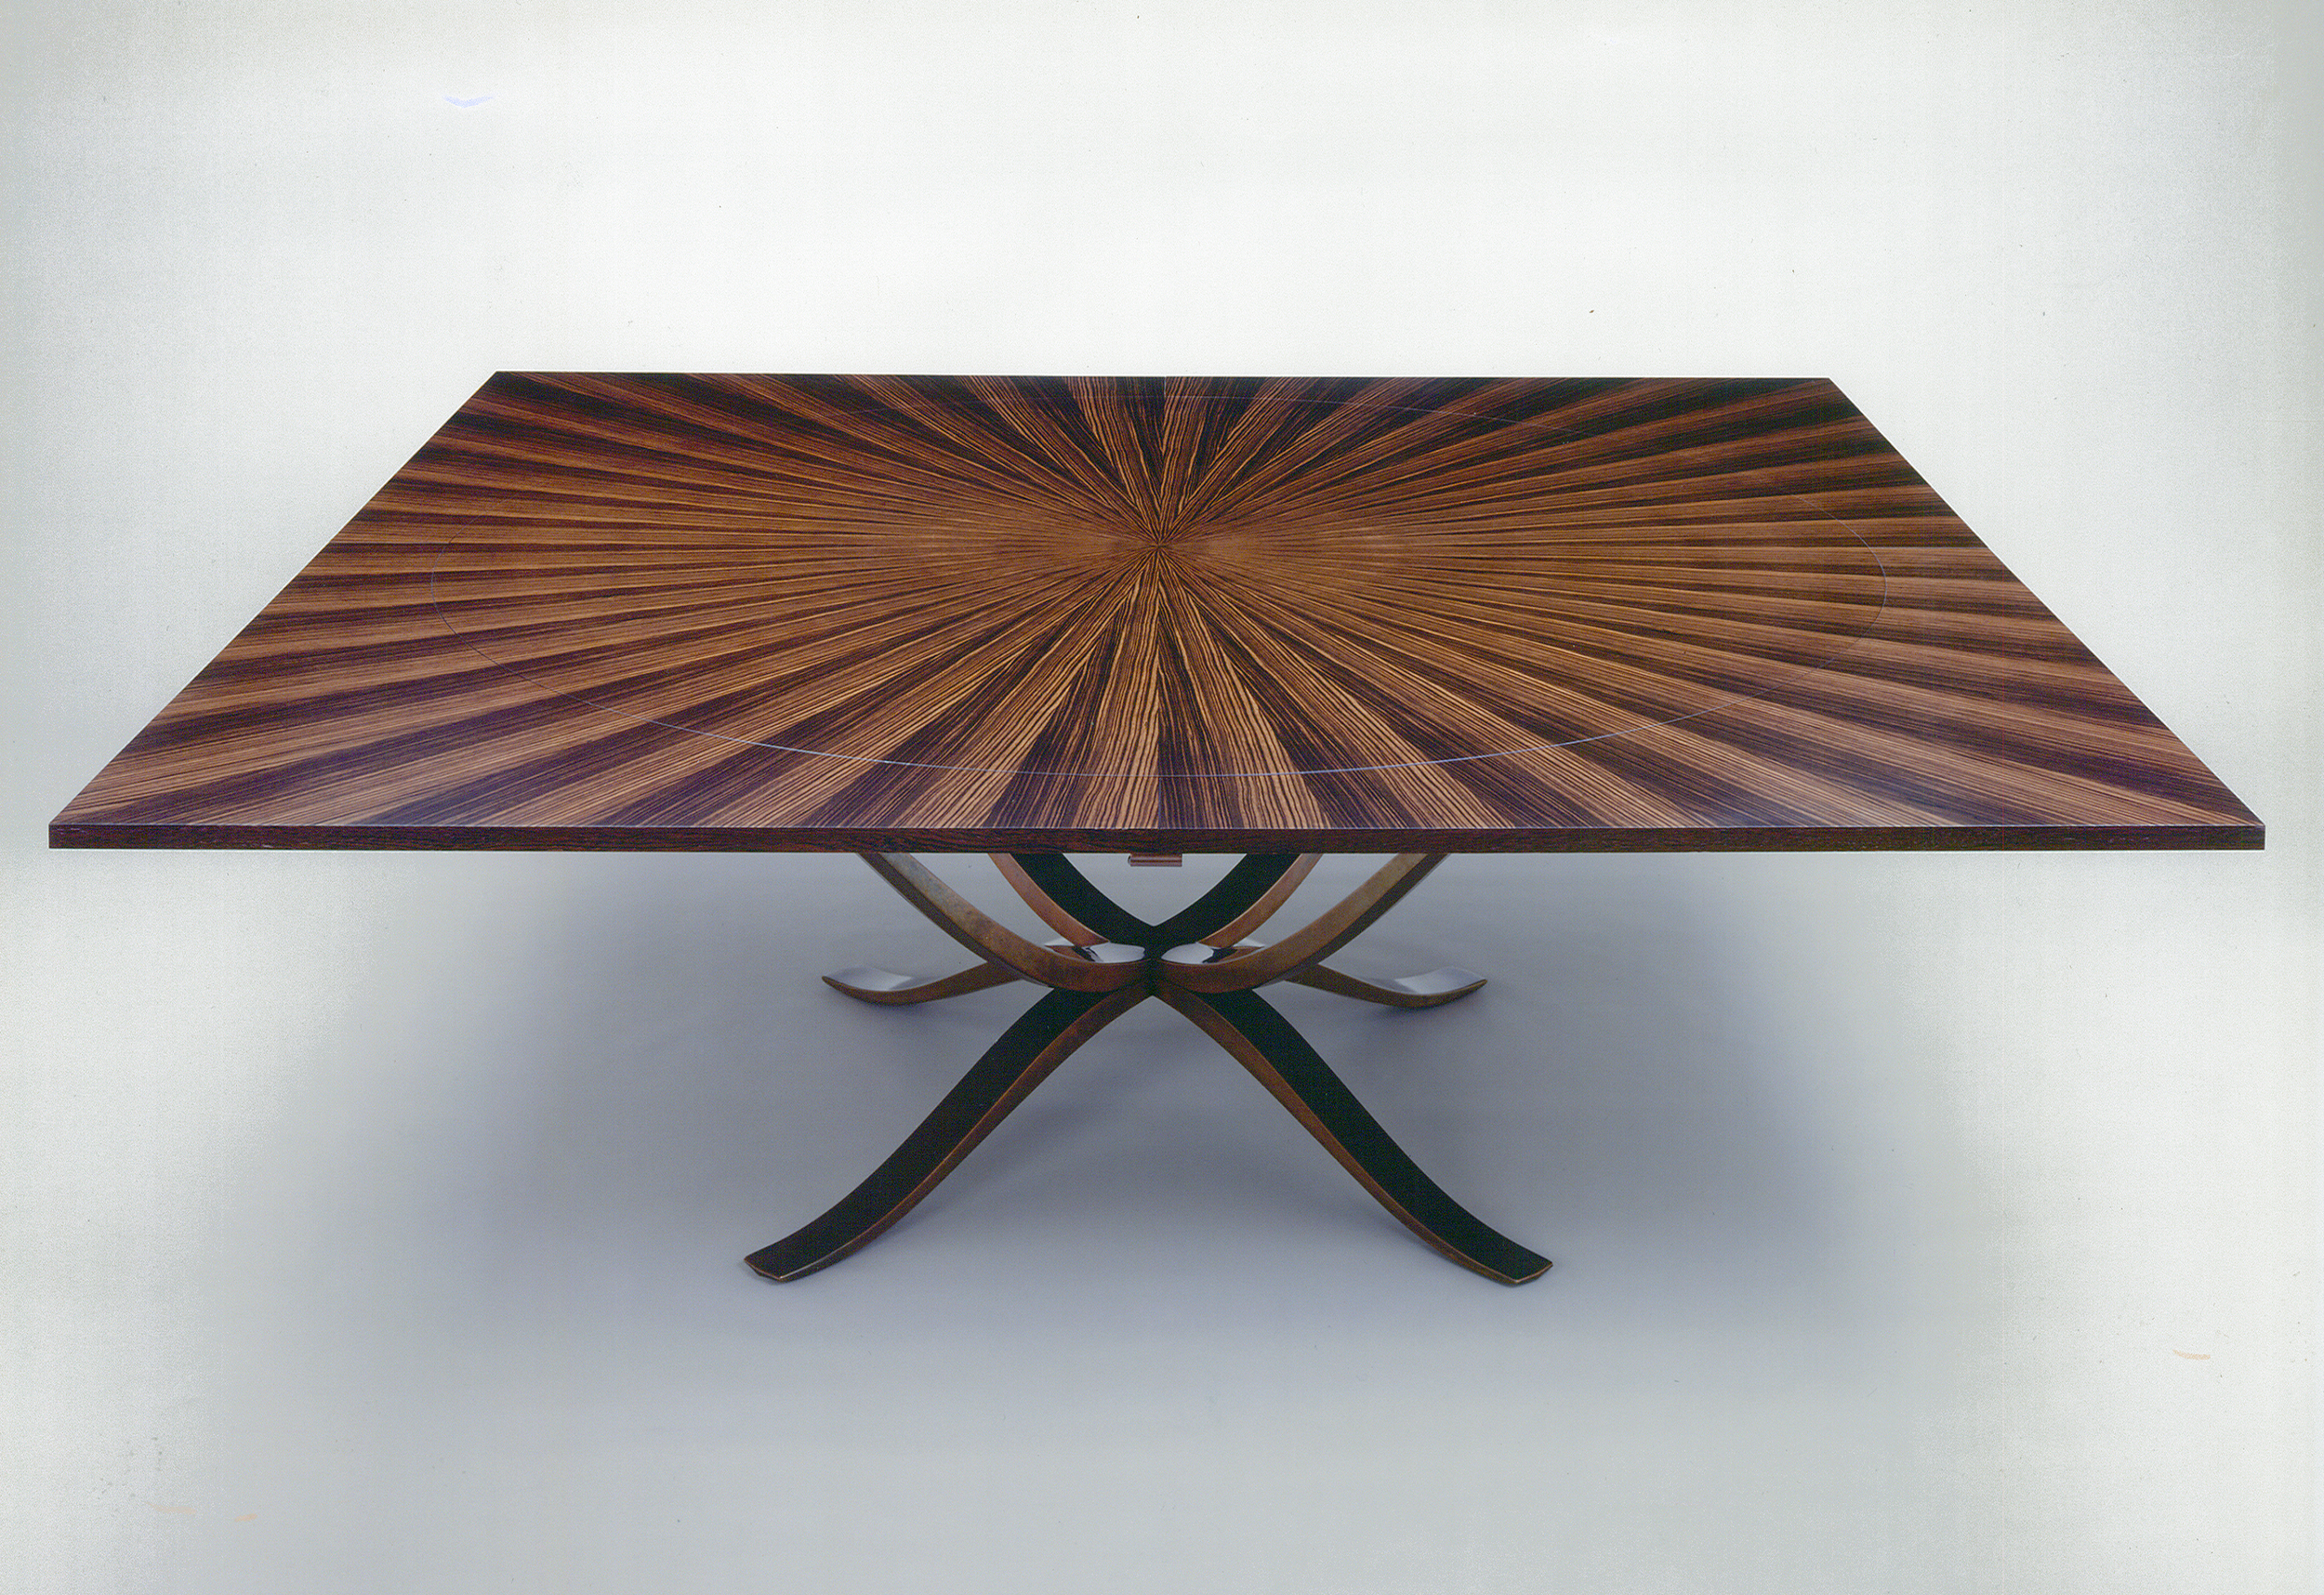 Edda Table Image 3.jpg